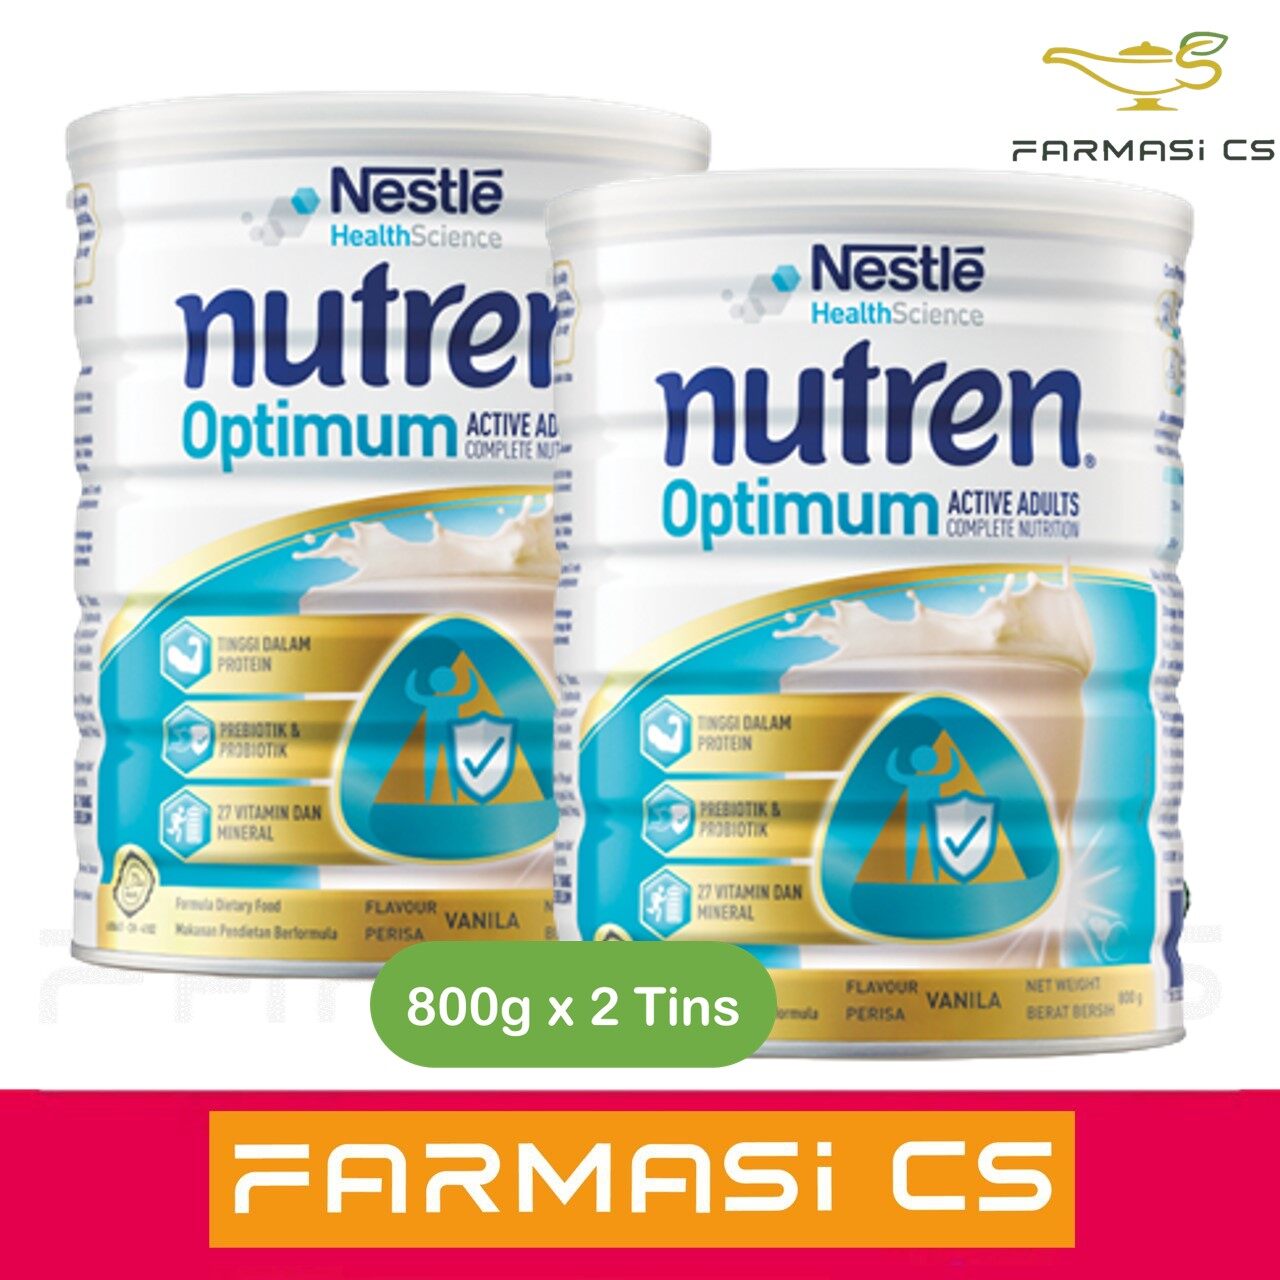 Nestle Nutren Optimum Active Adults Complete Nutrition 800g x 2 (TWIN) EXP:03/2023